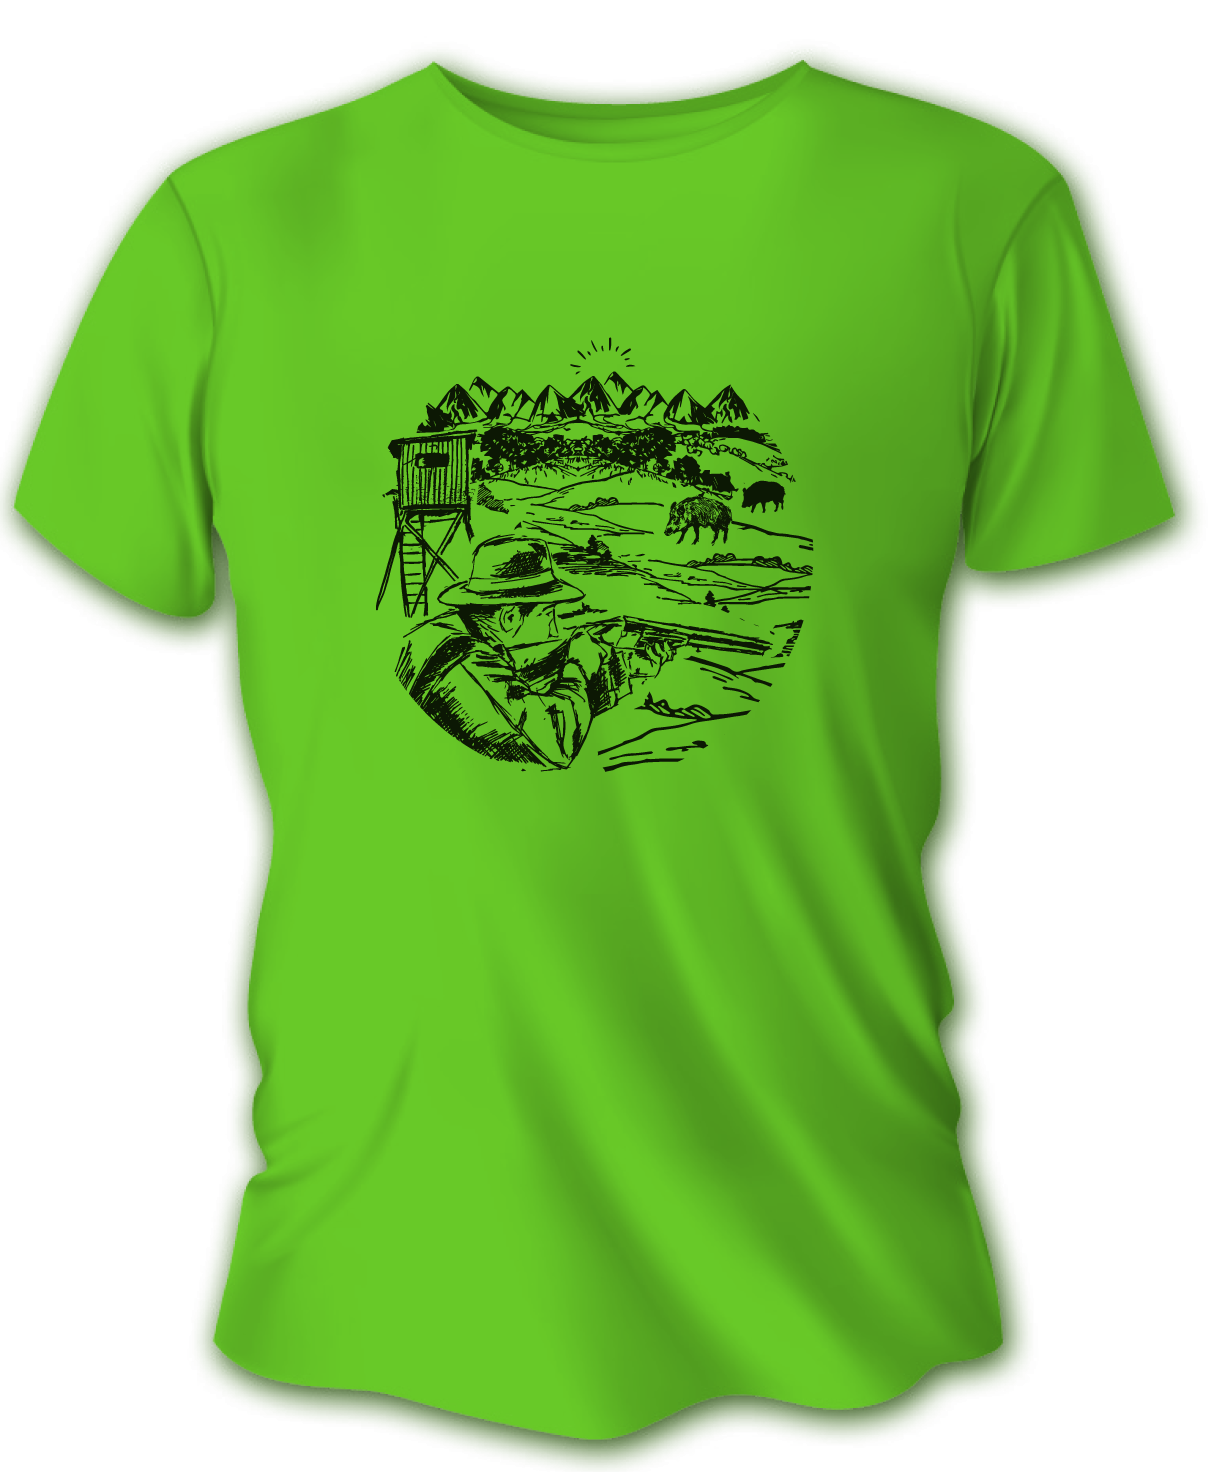 Pánske poľovnícke tričko TETRAO posed - bledozelené   XL